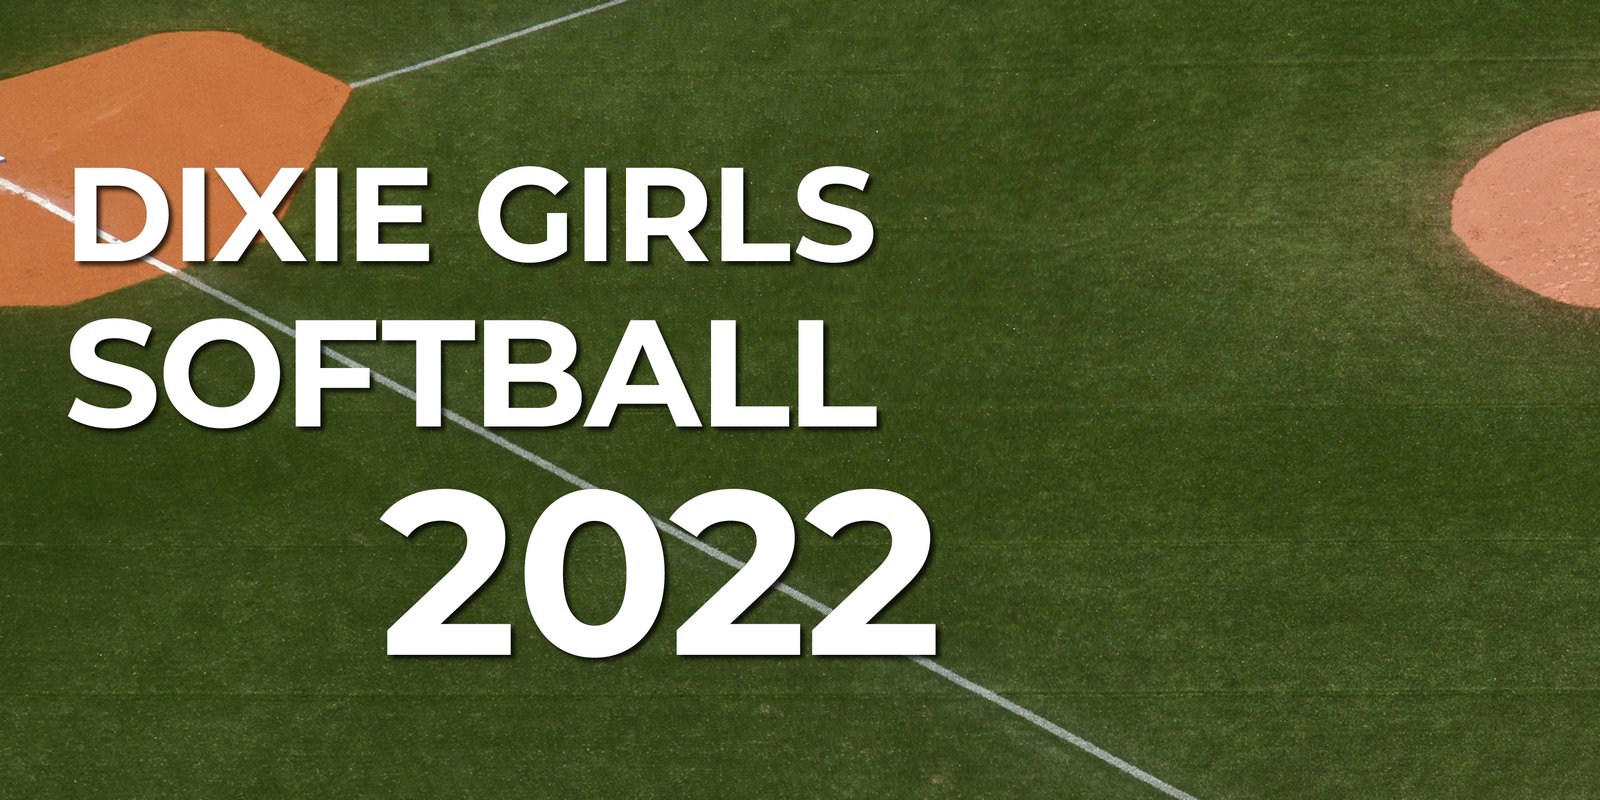 Dixie Girls Softball 2022